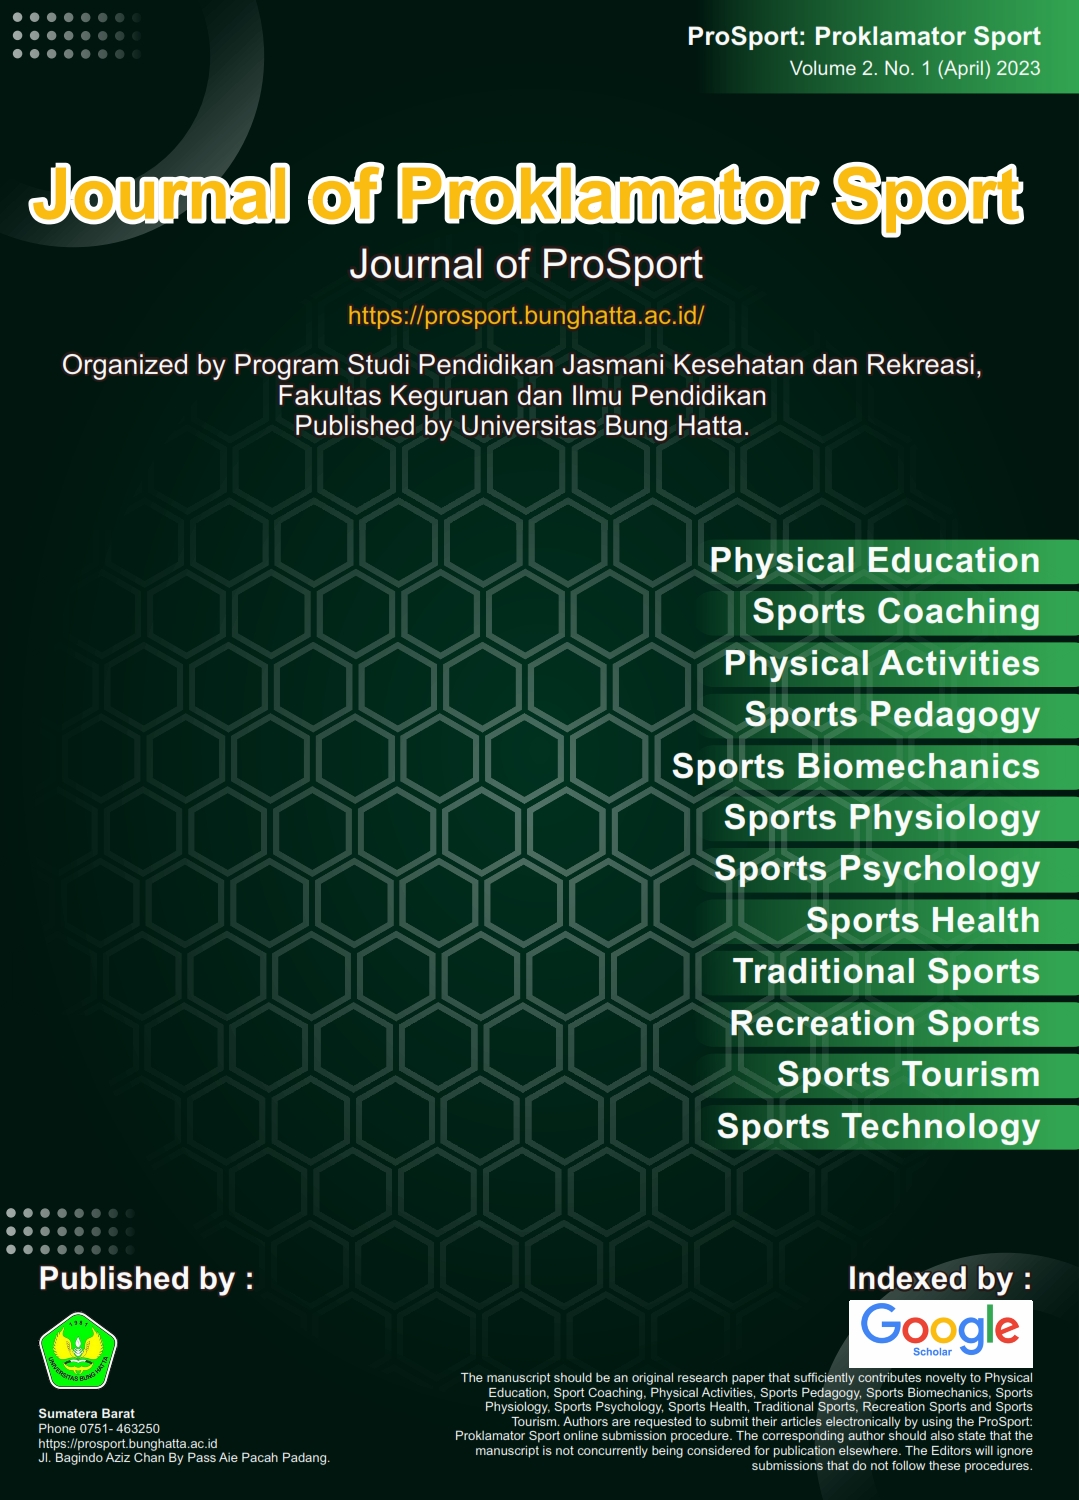 ProSport: Proklamator Sport, Vol 2 No 1 April (2023)